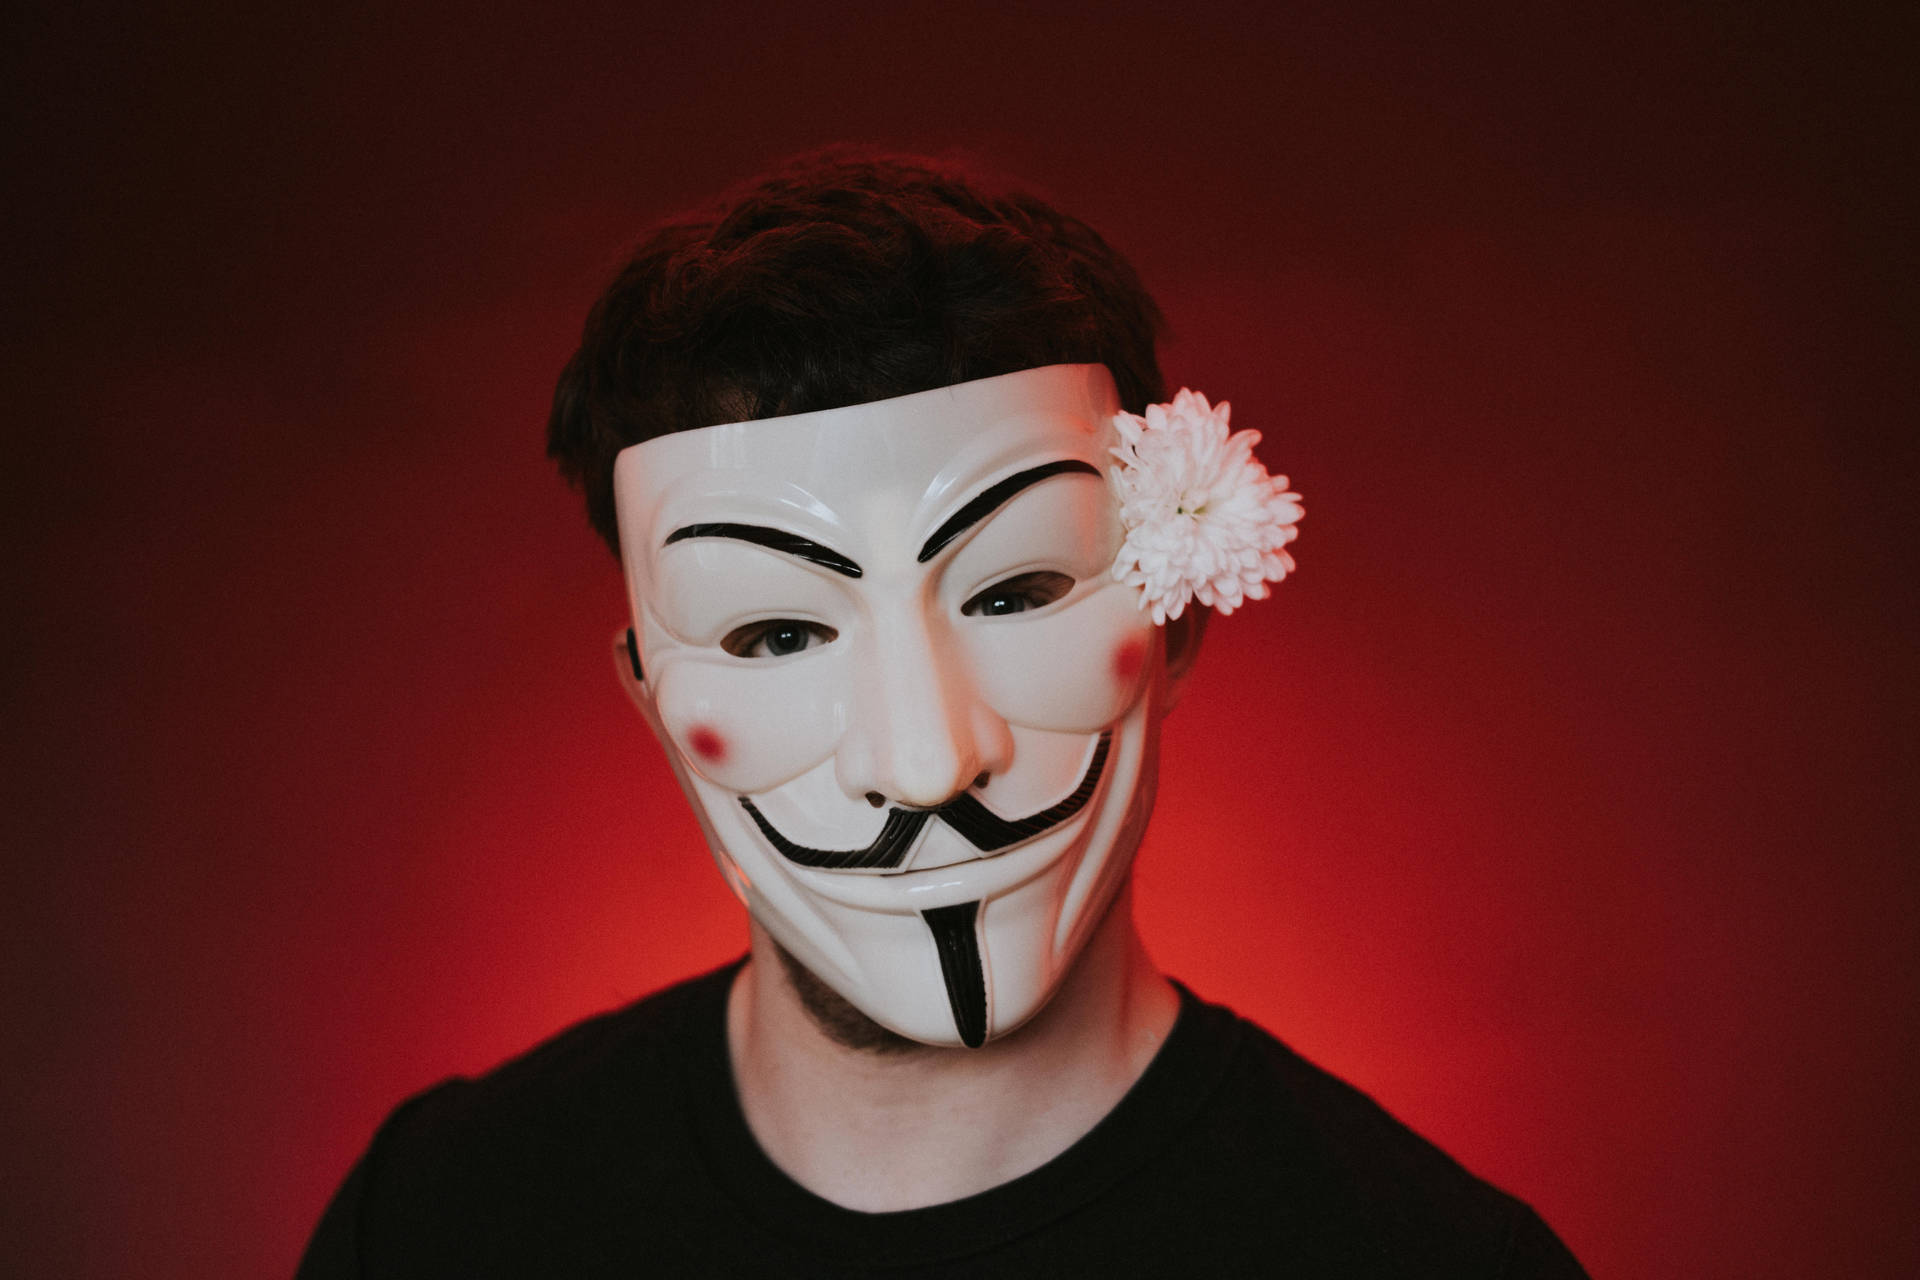 Man In Hacker Mask With Flower